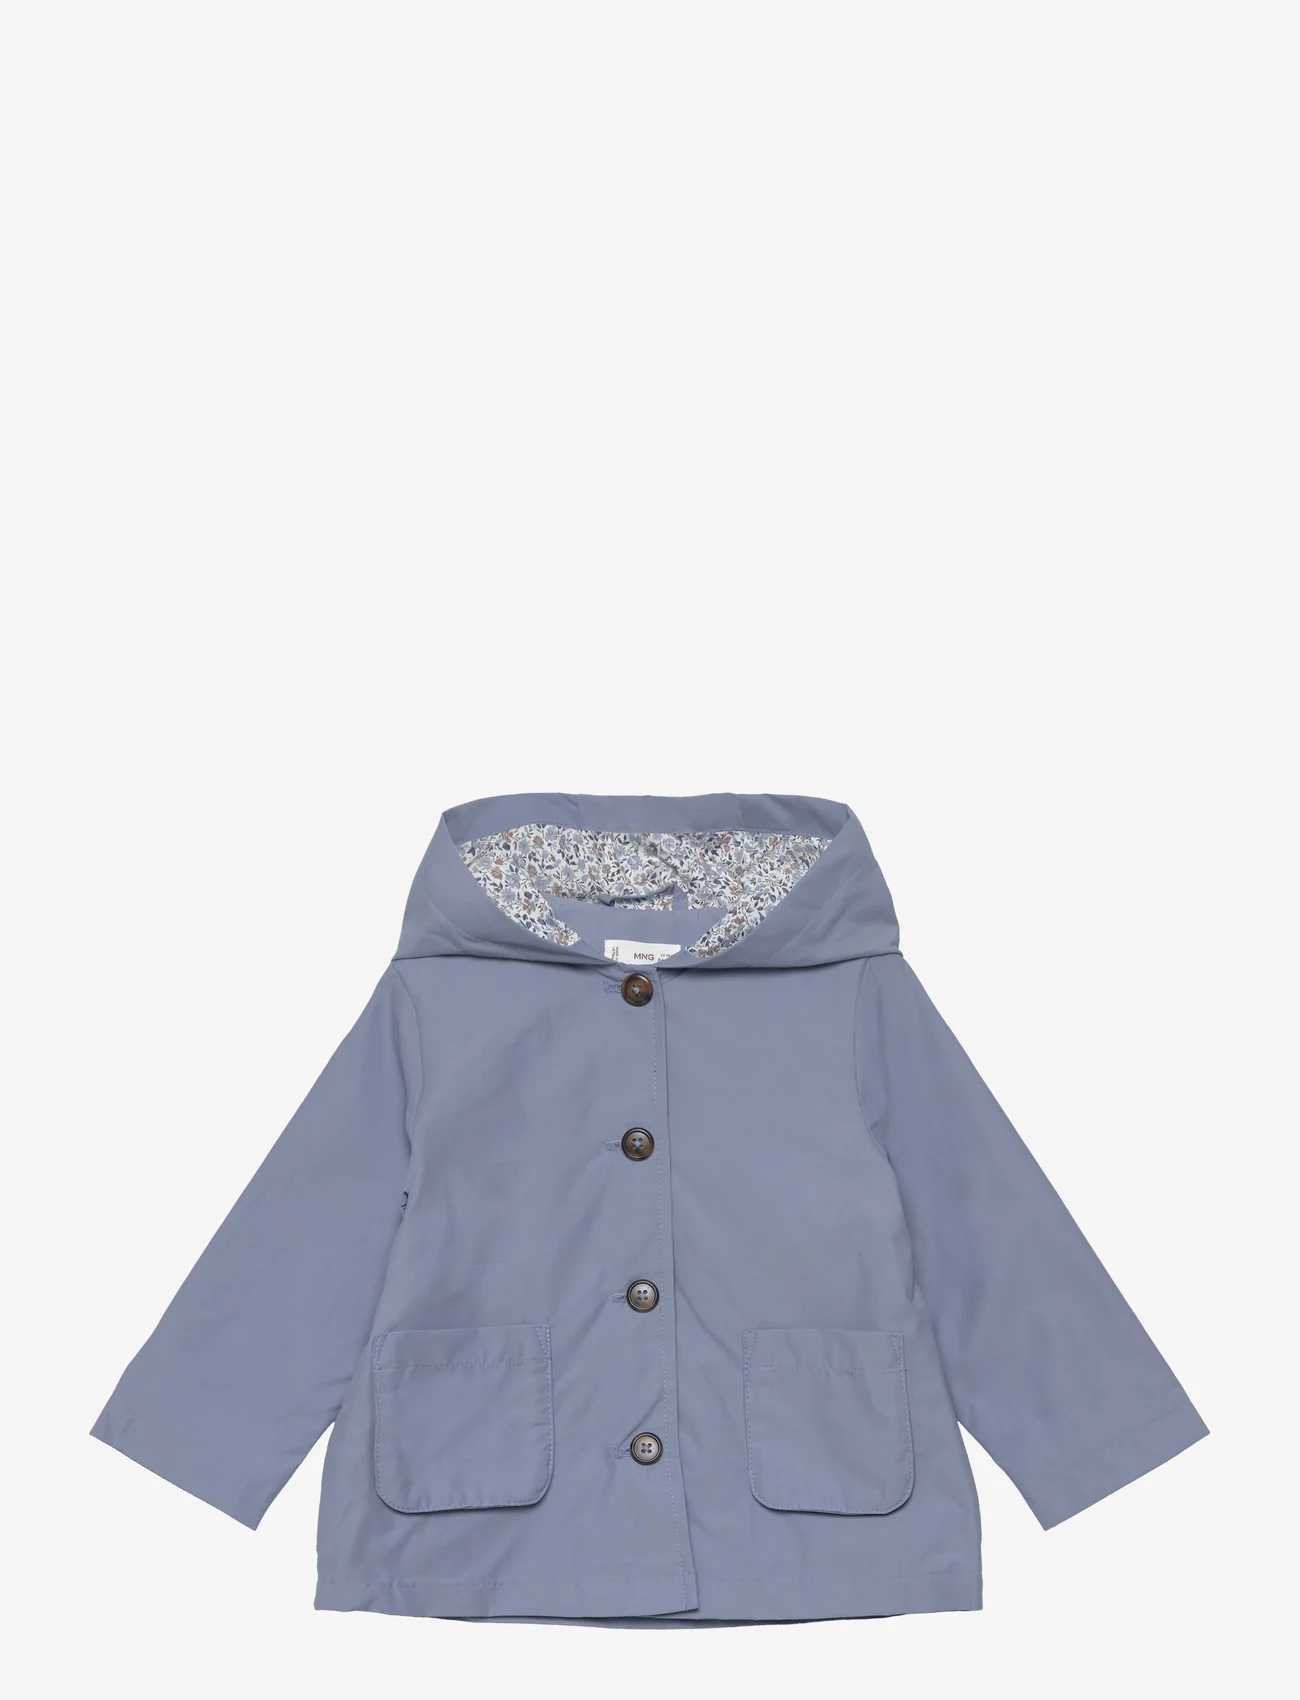 Mango - Buttoned cotton jacket - vårjakker - medium blue - 0